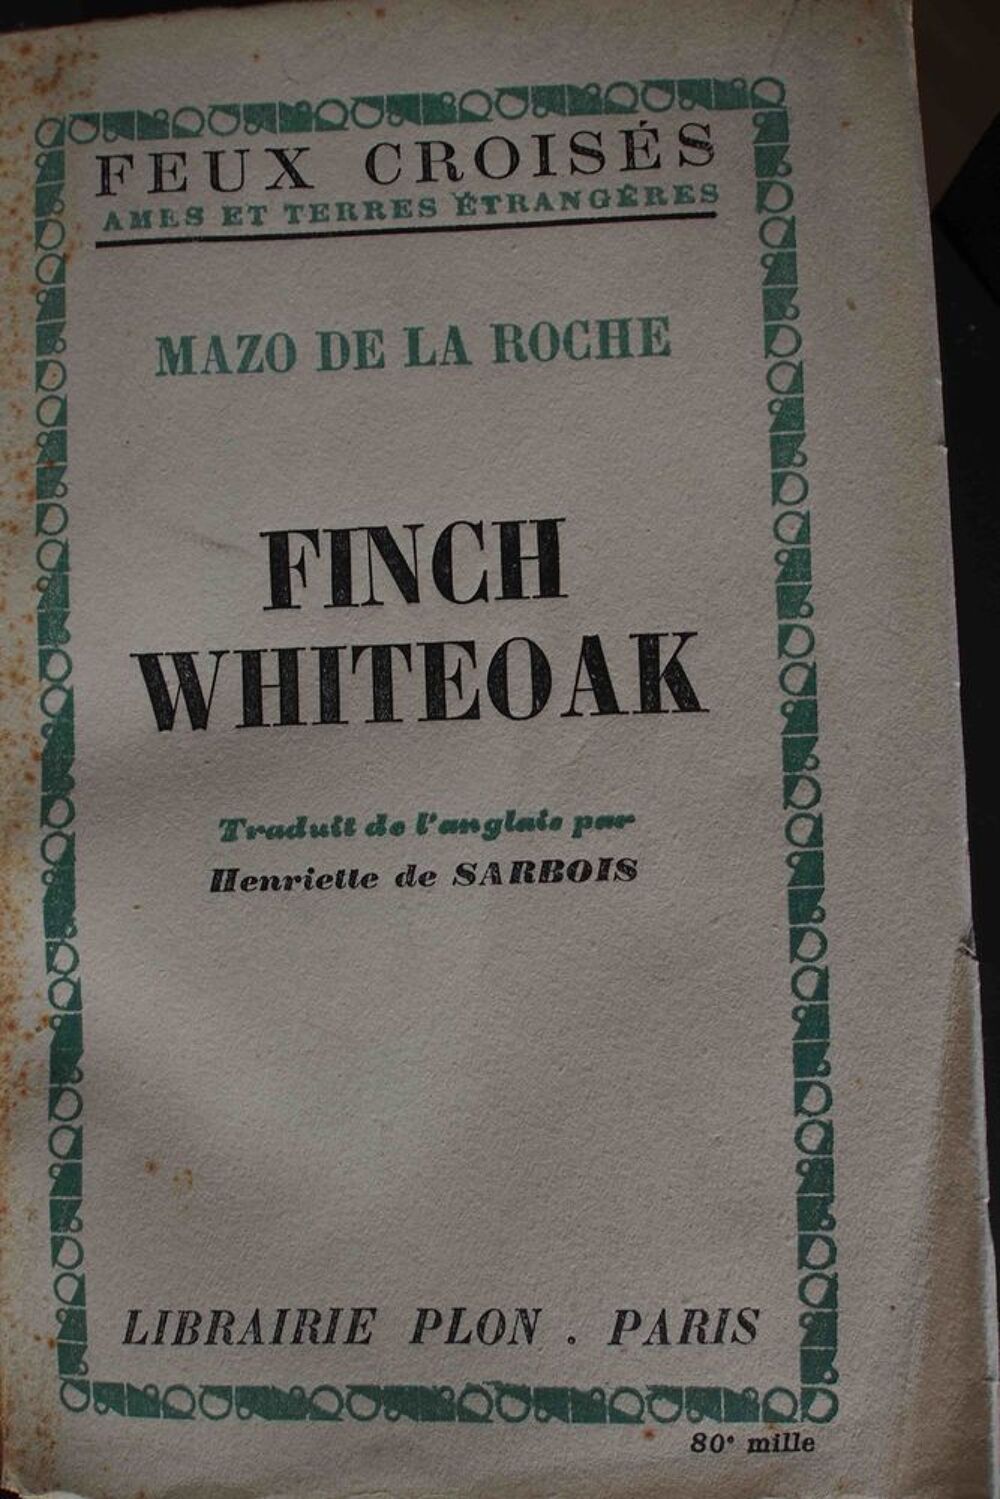 FINCH WHITEOAK - Mazo de la Roche, Livres et BD